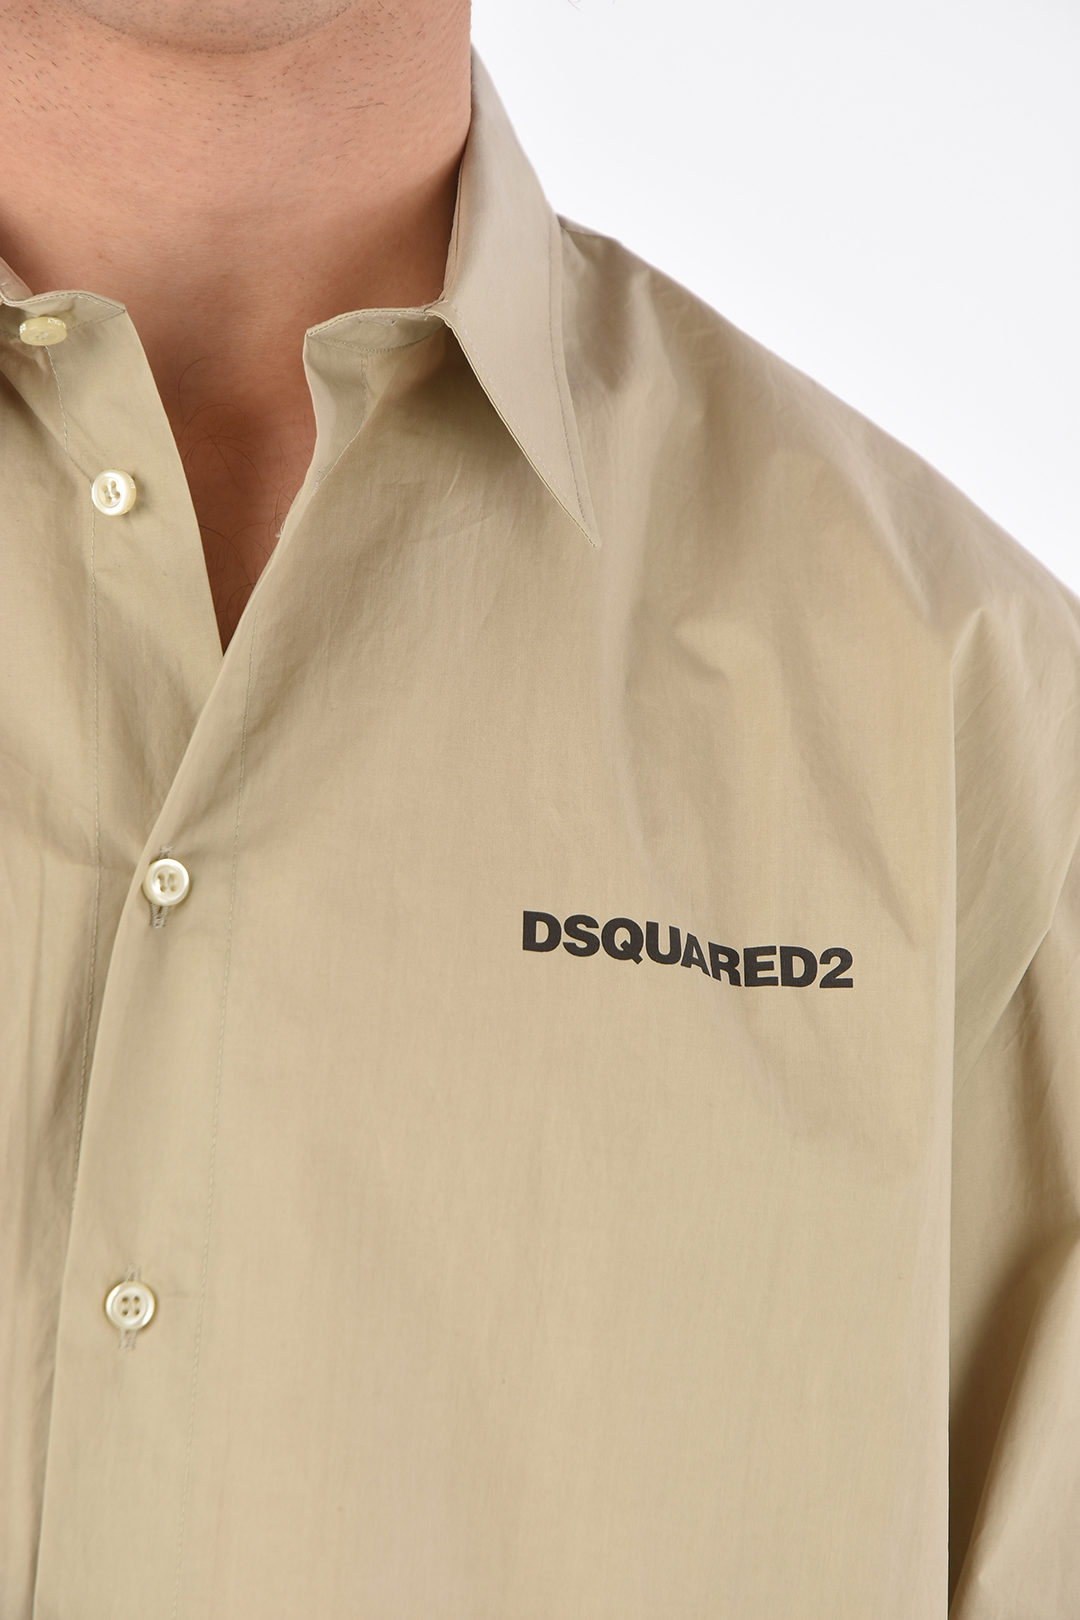 Arrangement Raadplegen Contour Dsquared2 Shirt with Waist Drawstrings men - Glamood Outlet